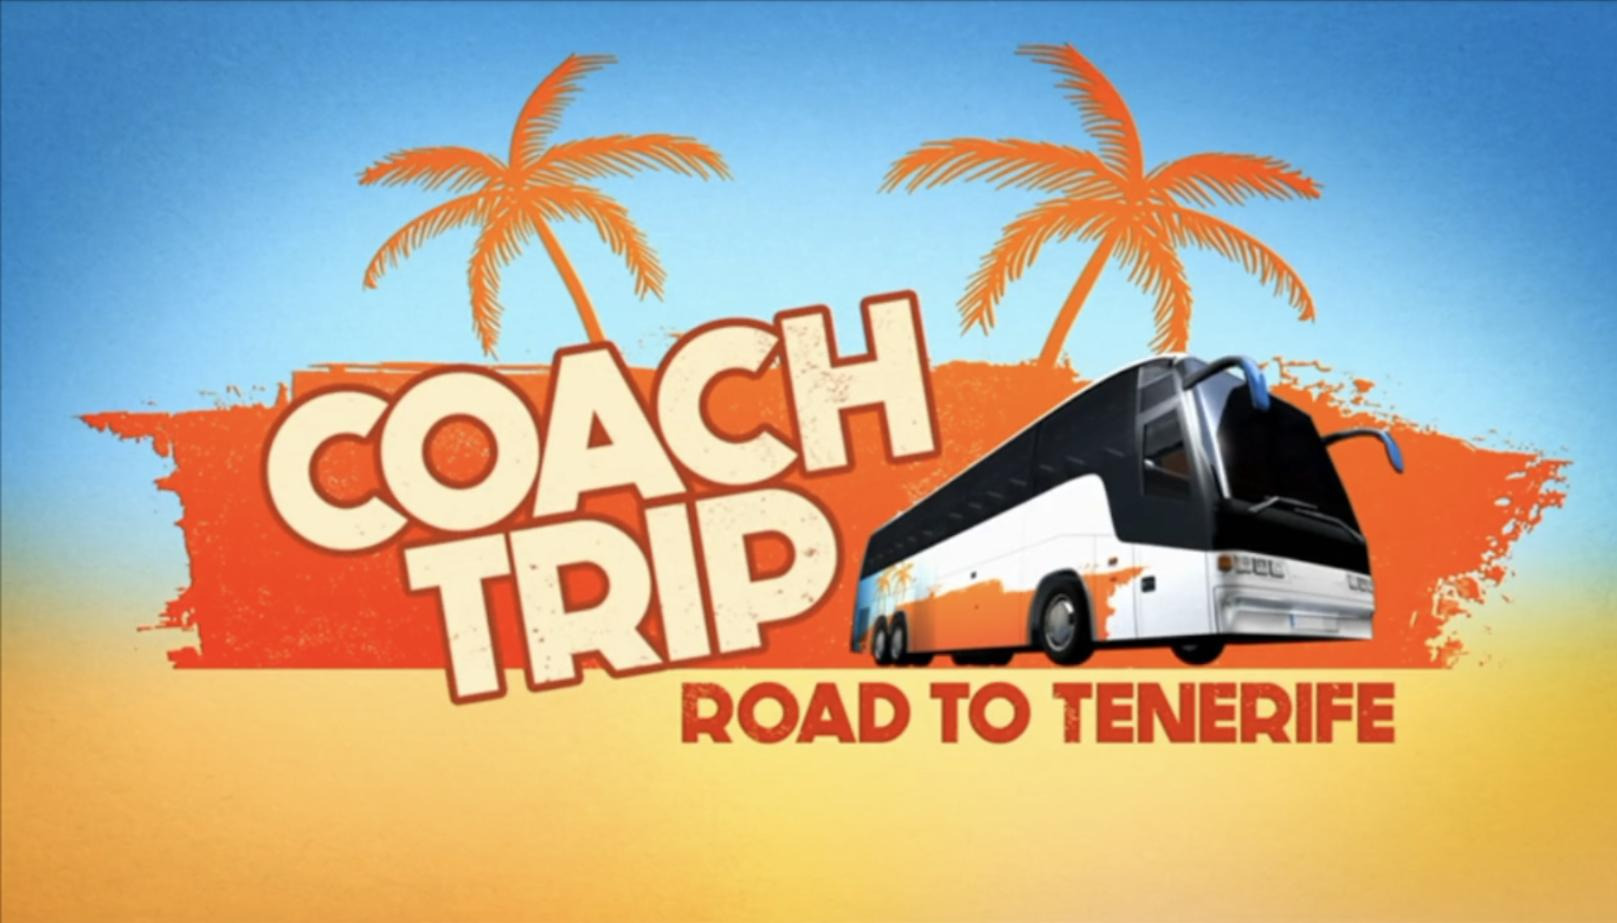 Show Coach Trip: Road to Tenerife